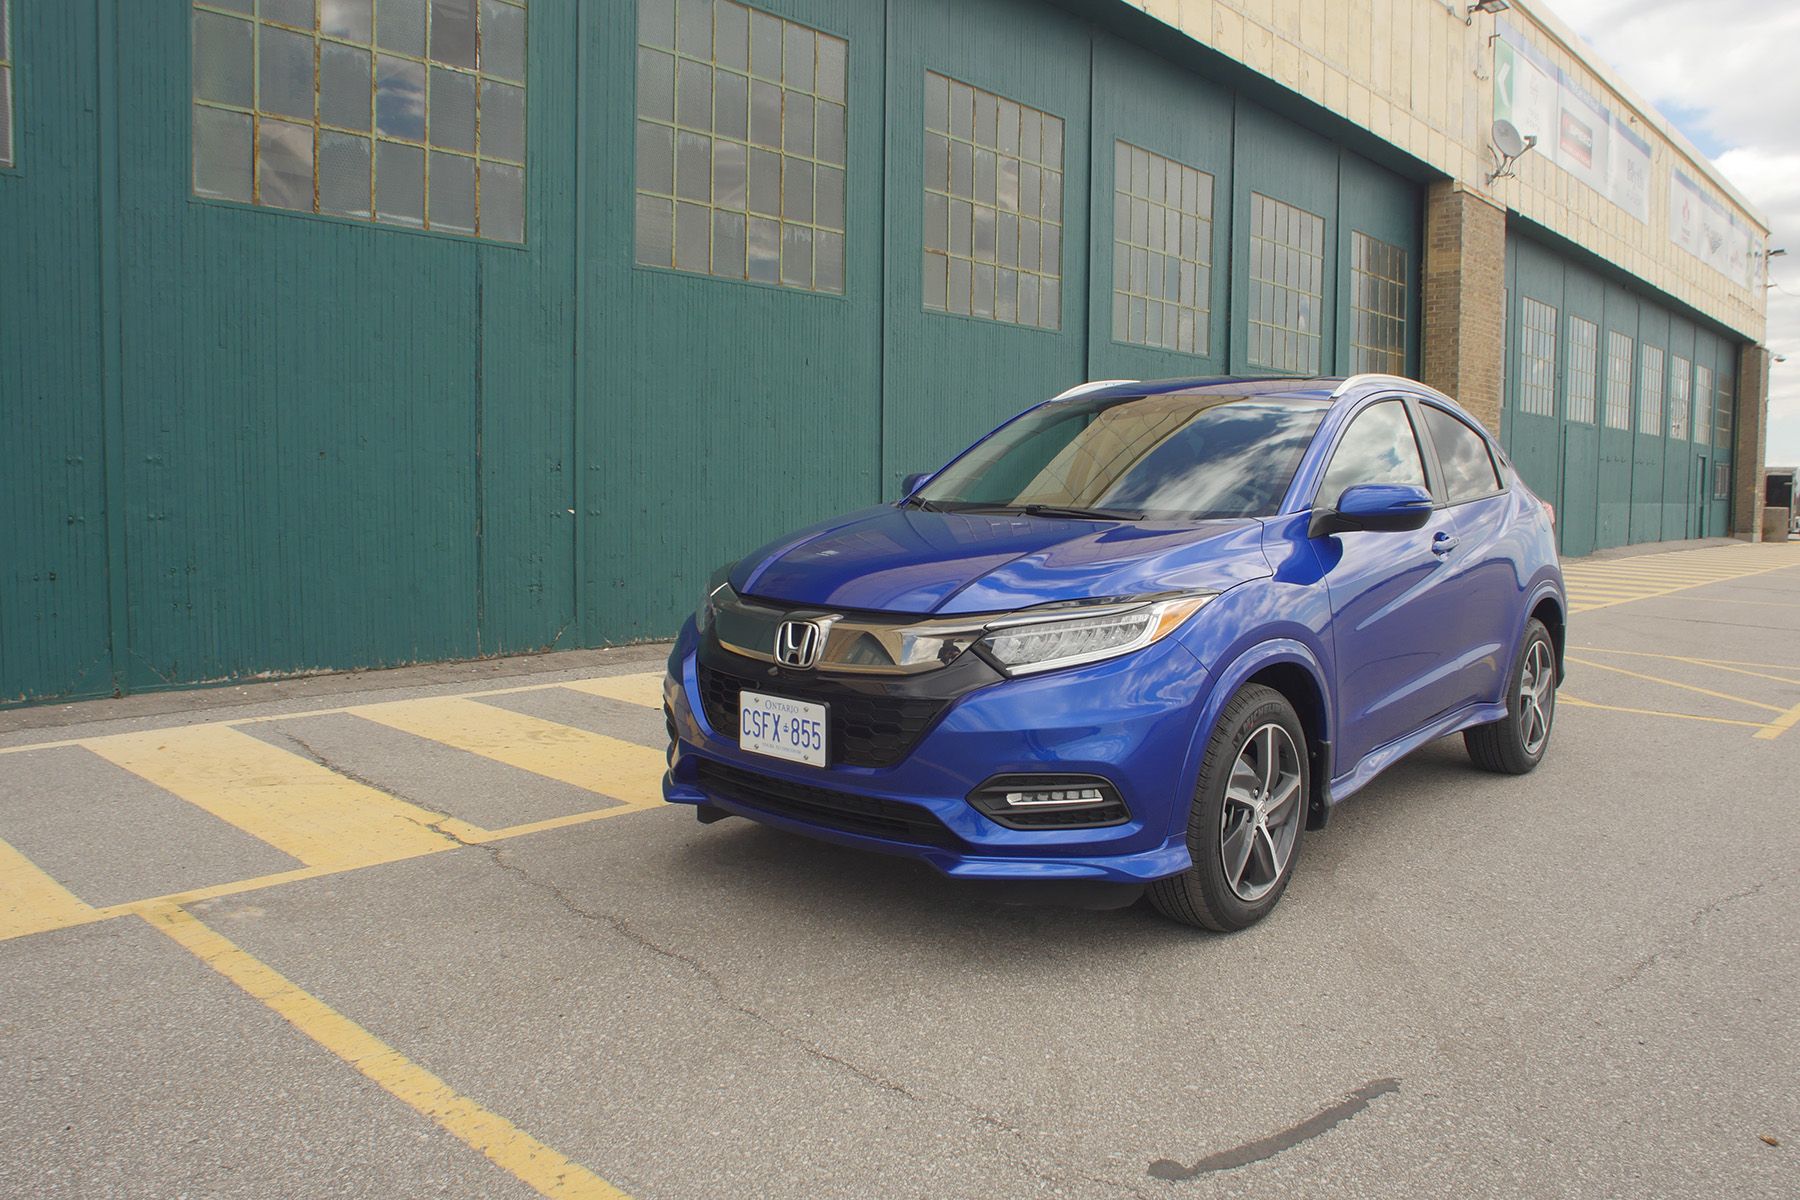 SUV Review: 2021 Honda HR-V | Driving